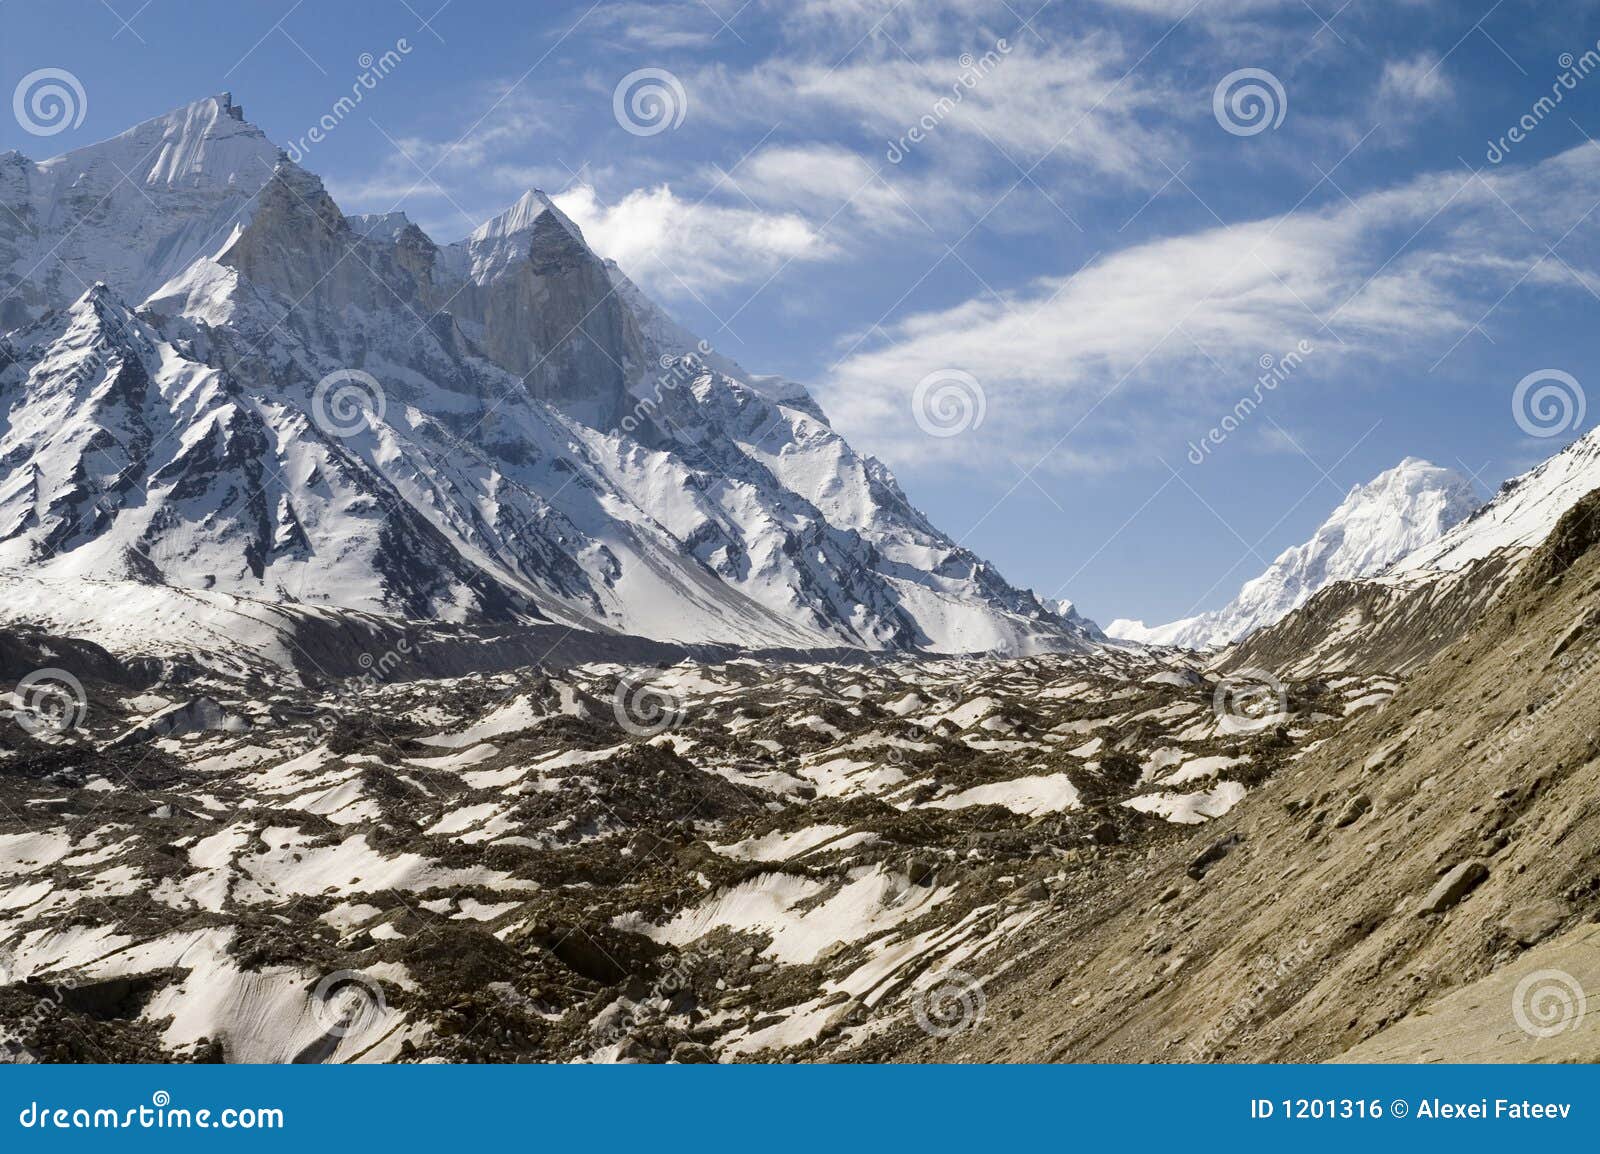 baghirathi parbat and gangotri glacier